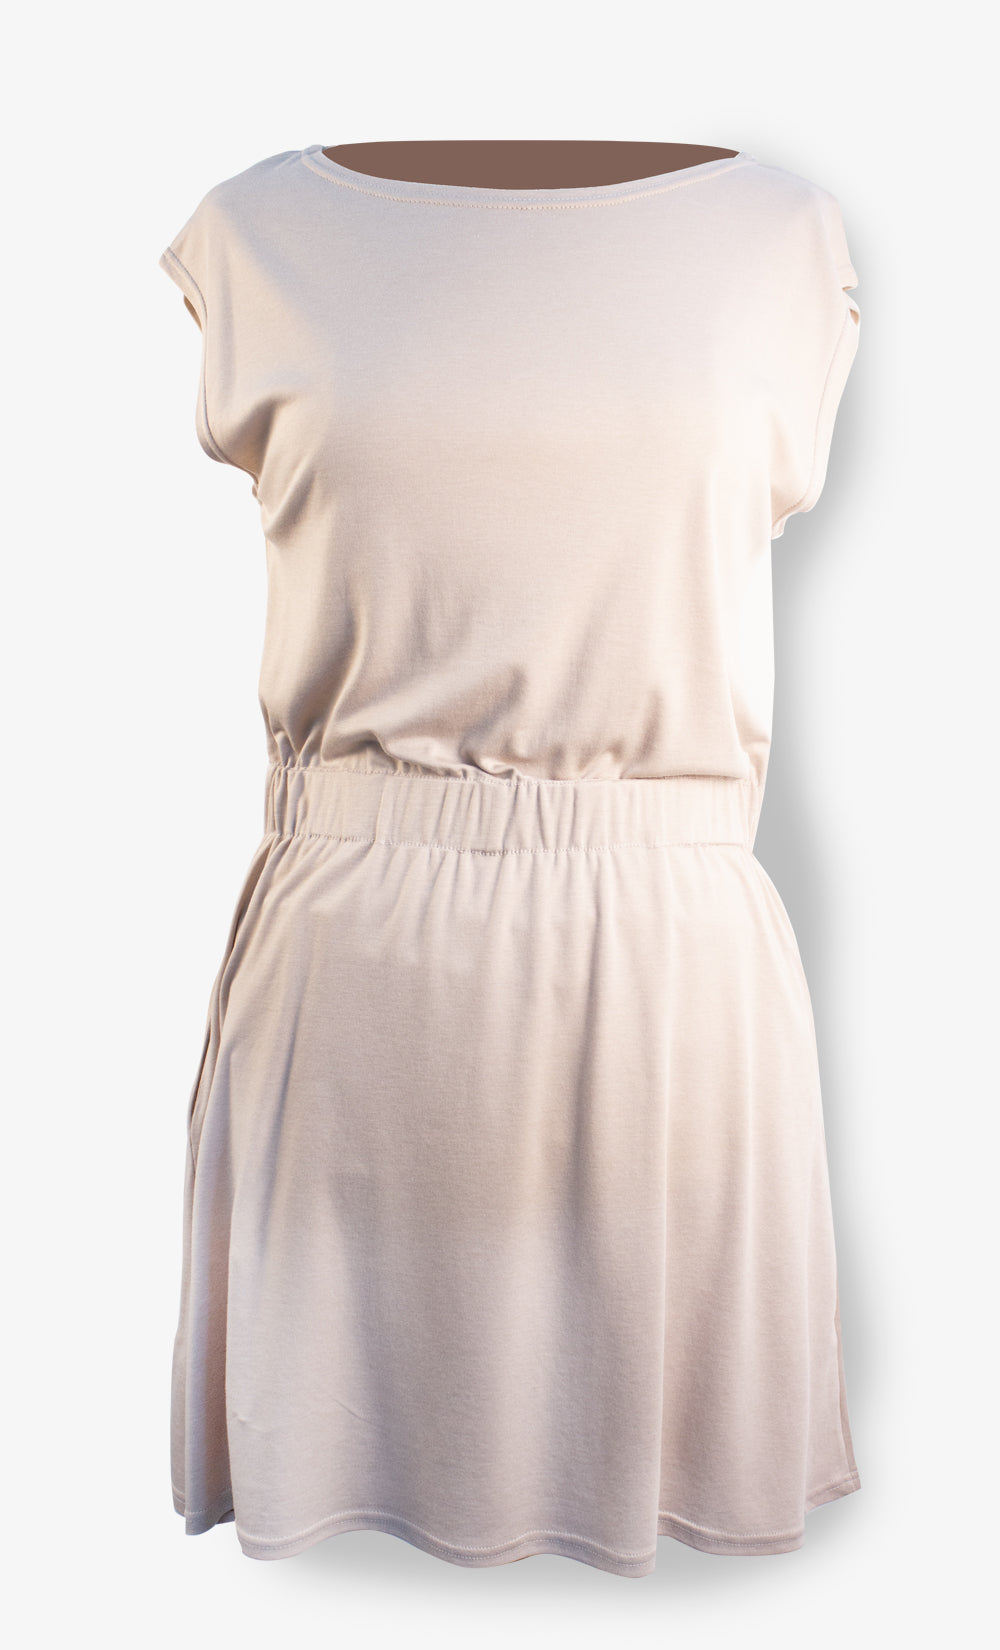 1 - Women's Tencel Dress Blank Template: Dress Color - Model Name